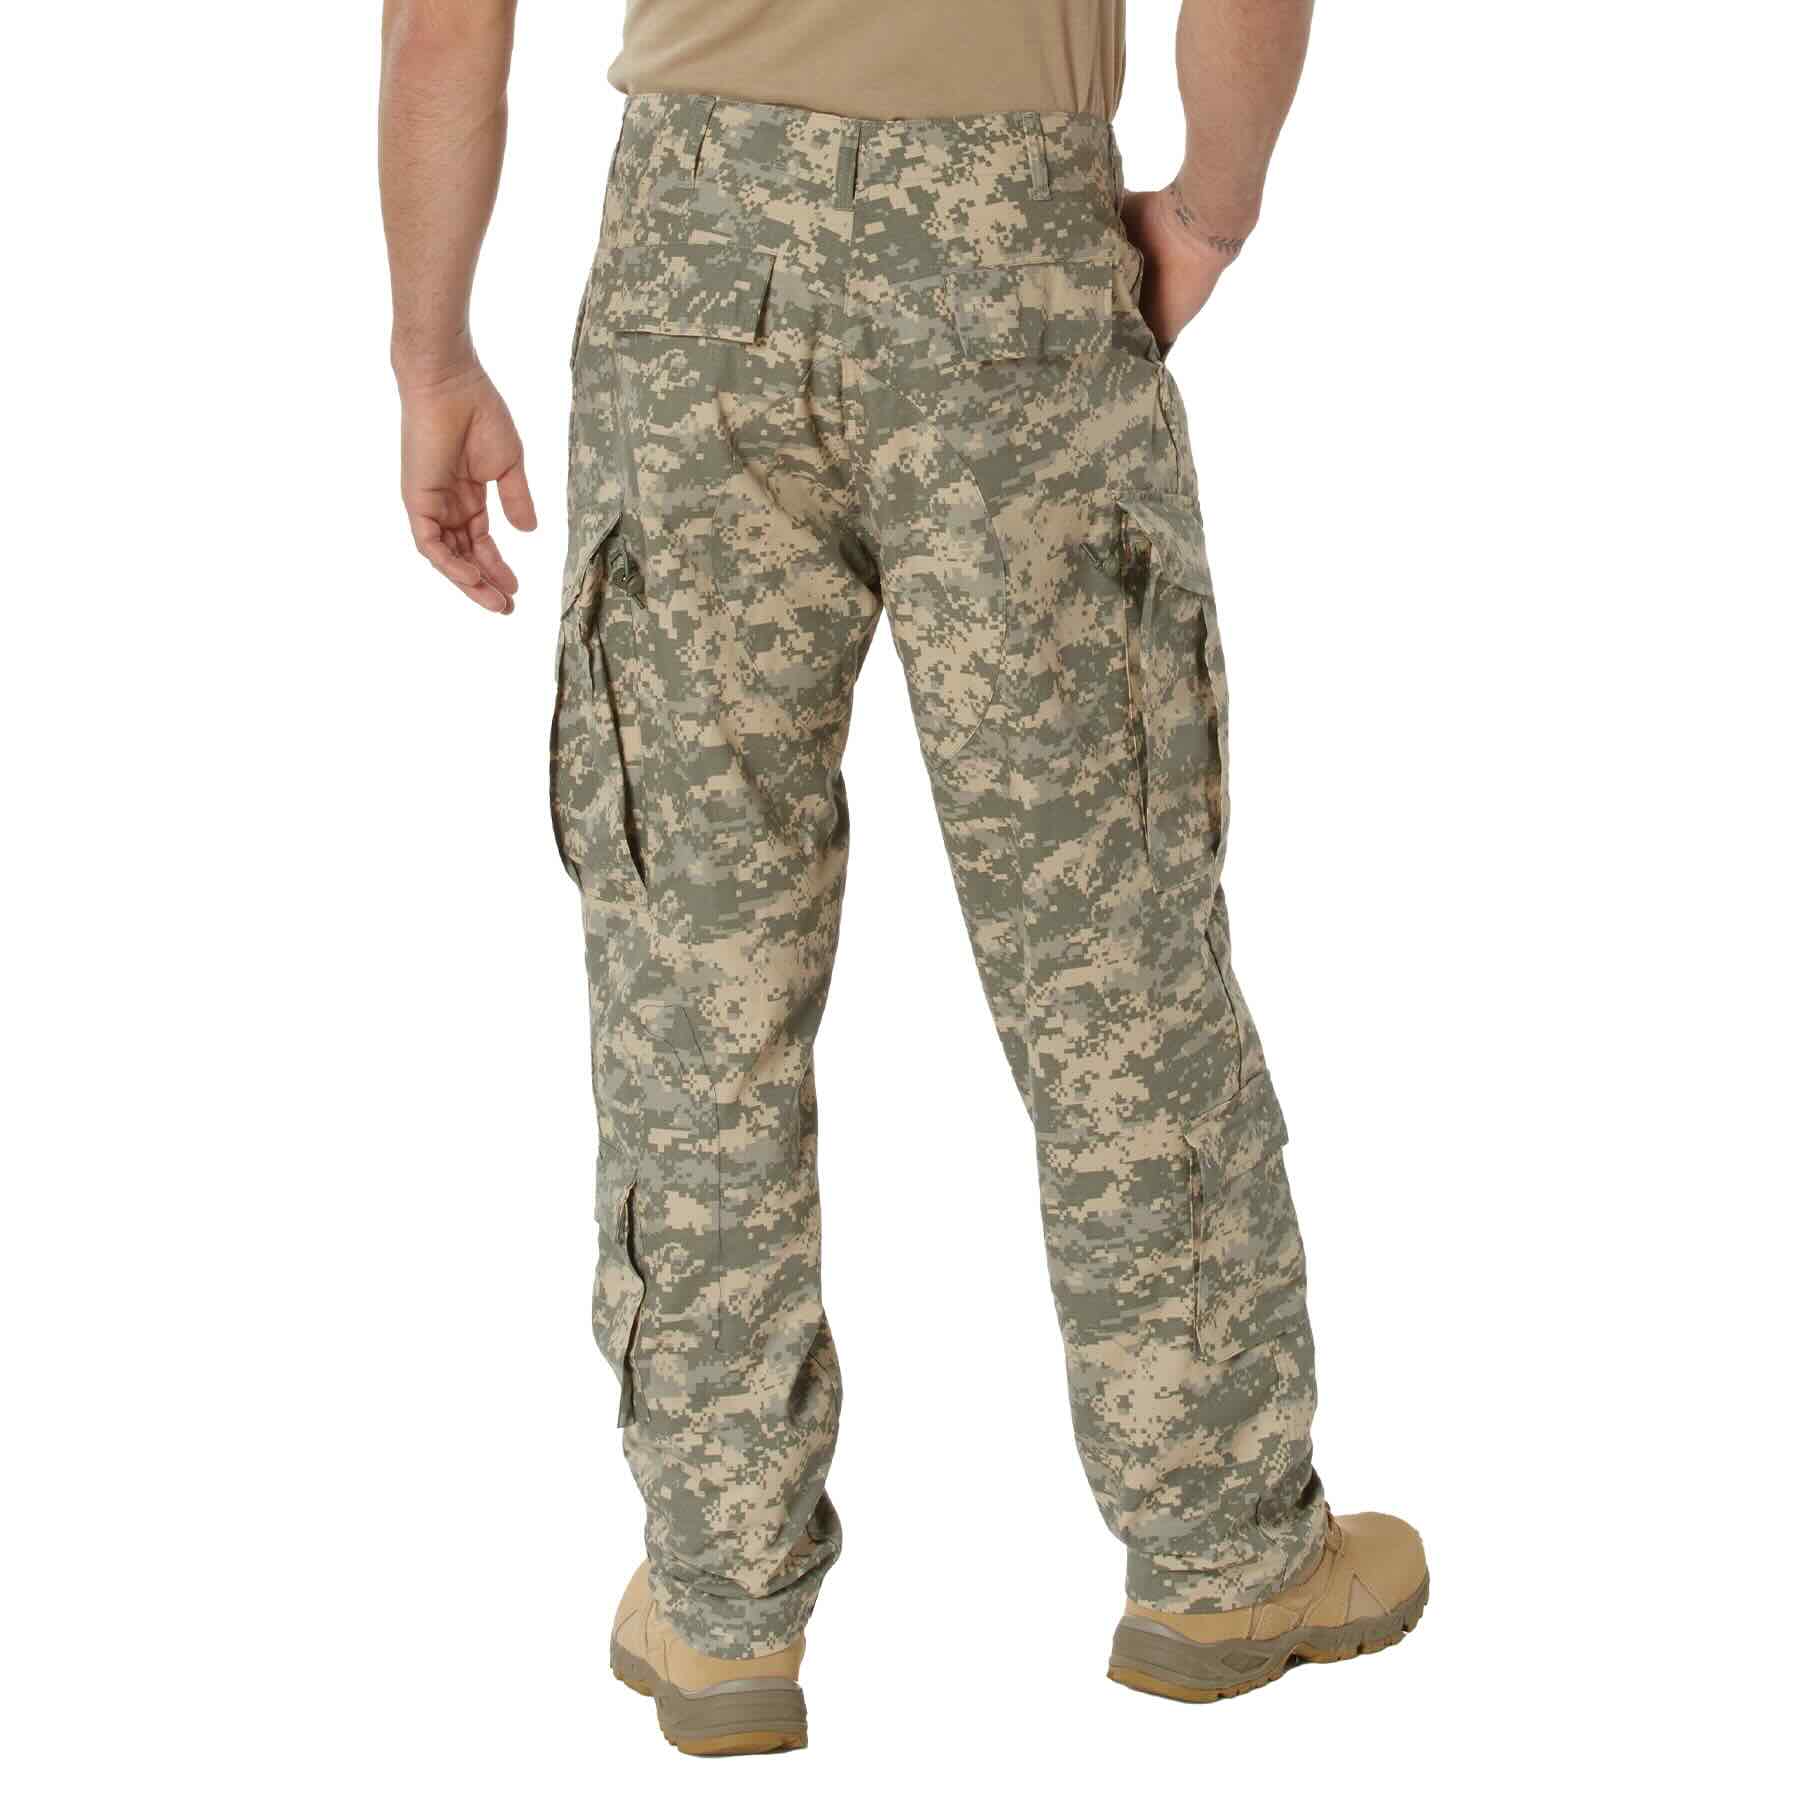 Pants - Rothco Camo Combat Uniform Pants